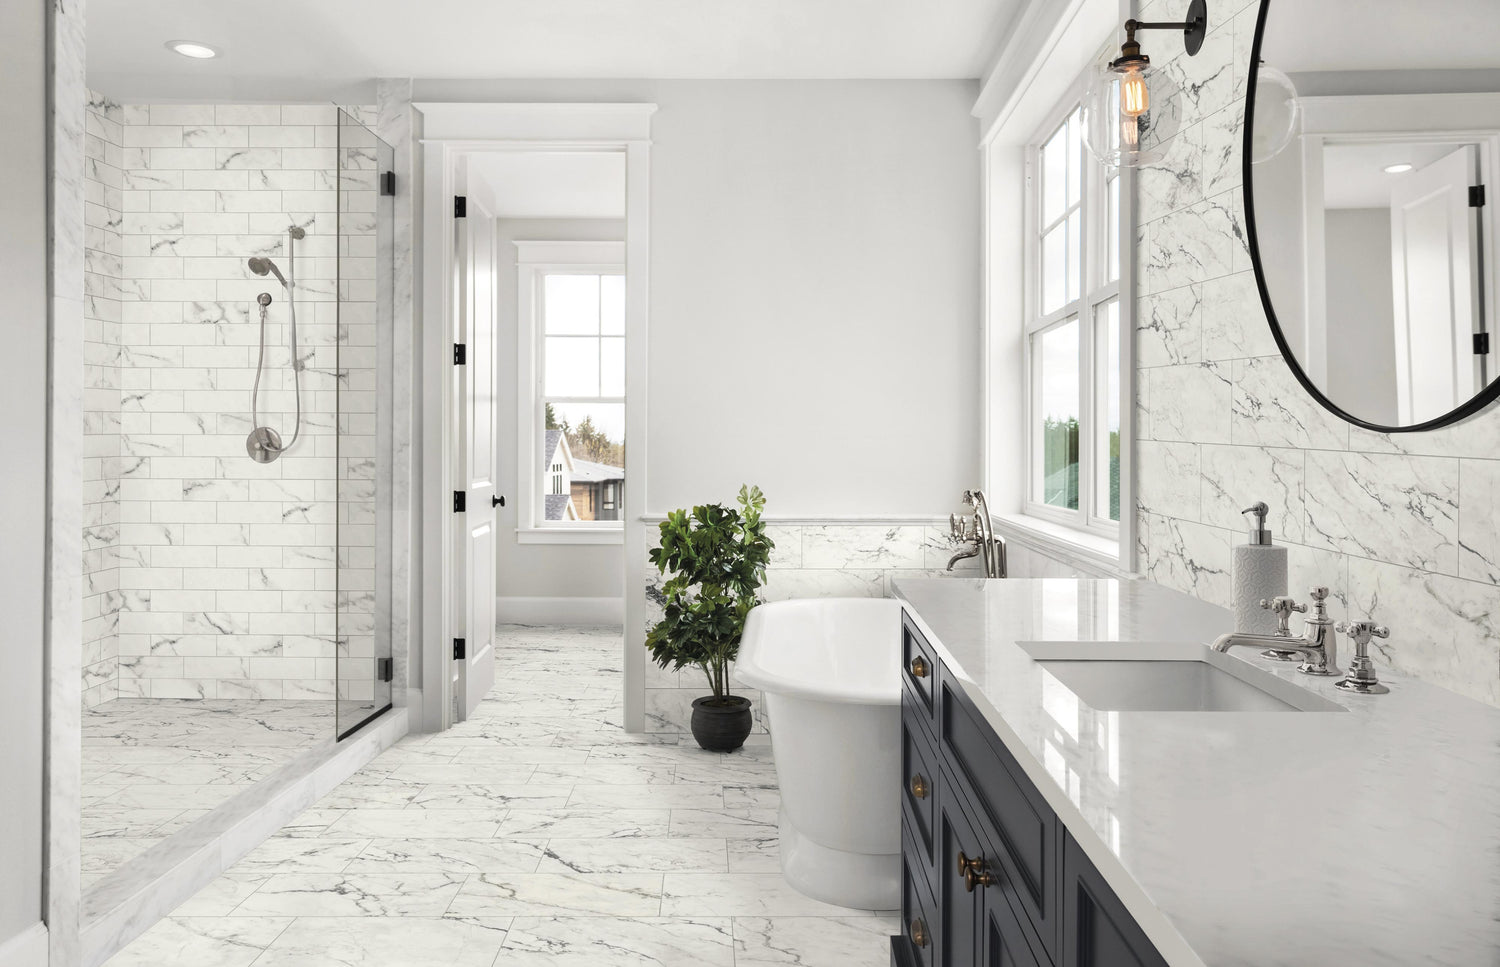 Is Ceramic or Porcelain Tile Better for a Bathroom Floor?